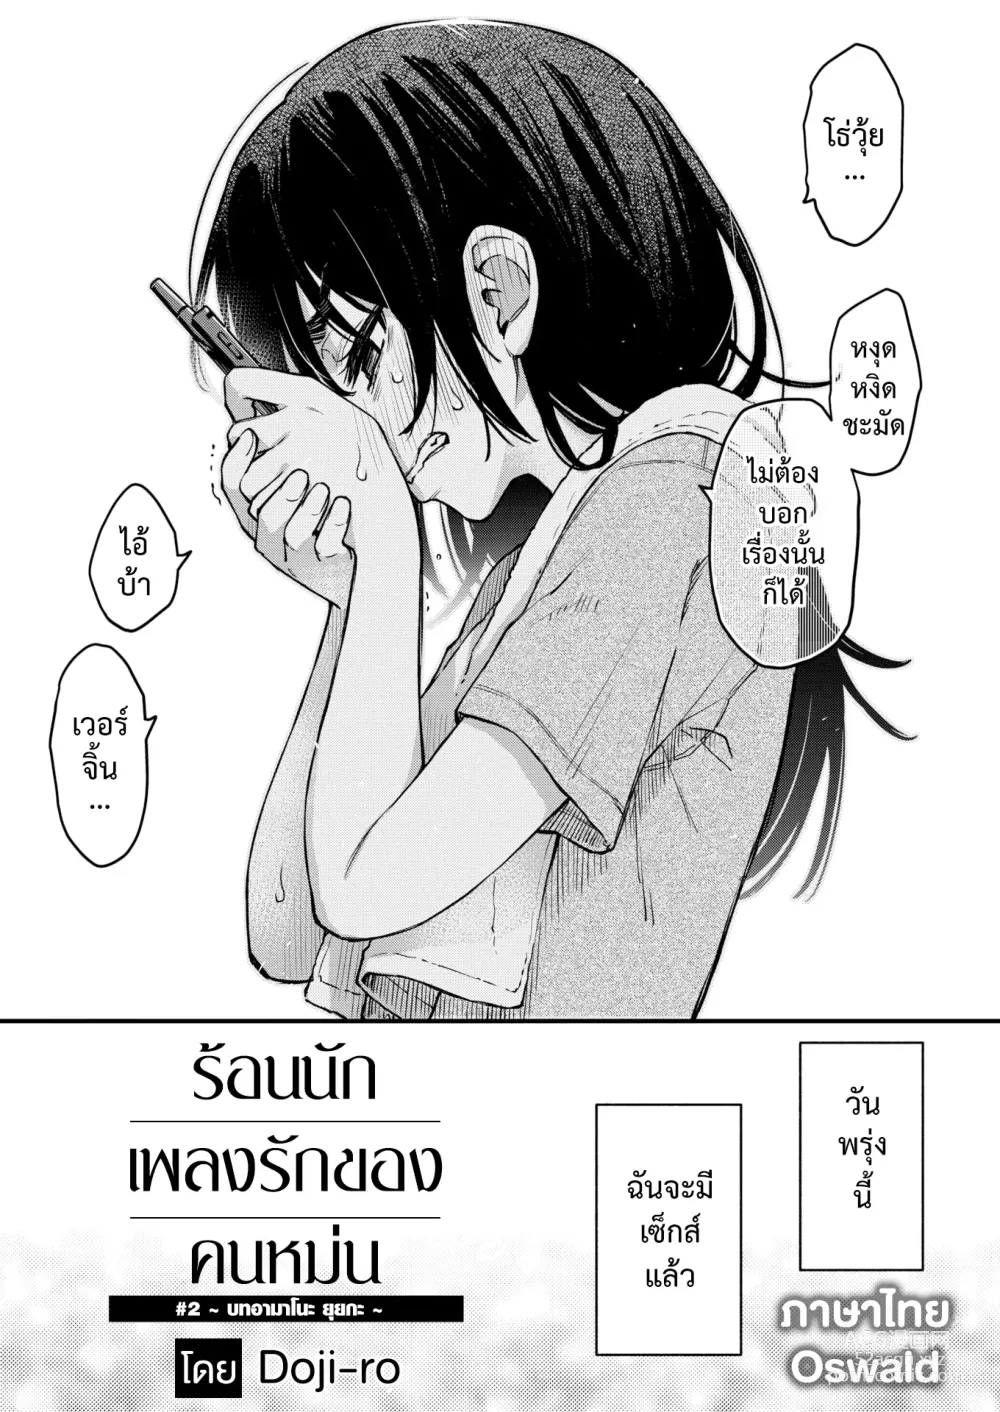 Page 4 of manga เพลงรักของคนหม่น #2 -บทอามาโนะ ยุยกะ-